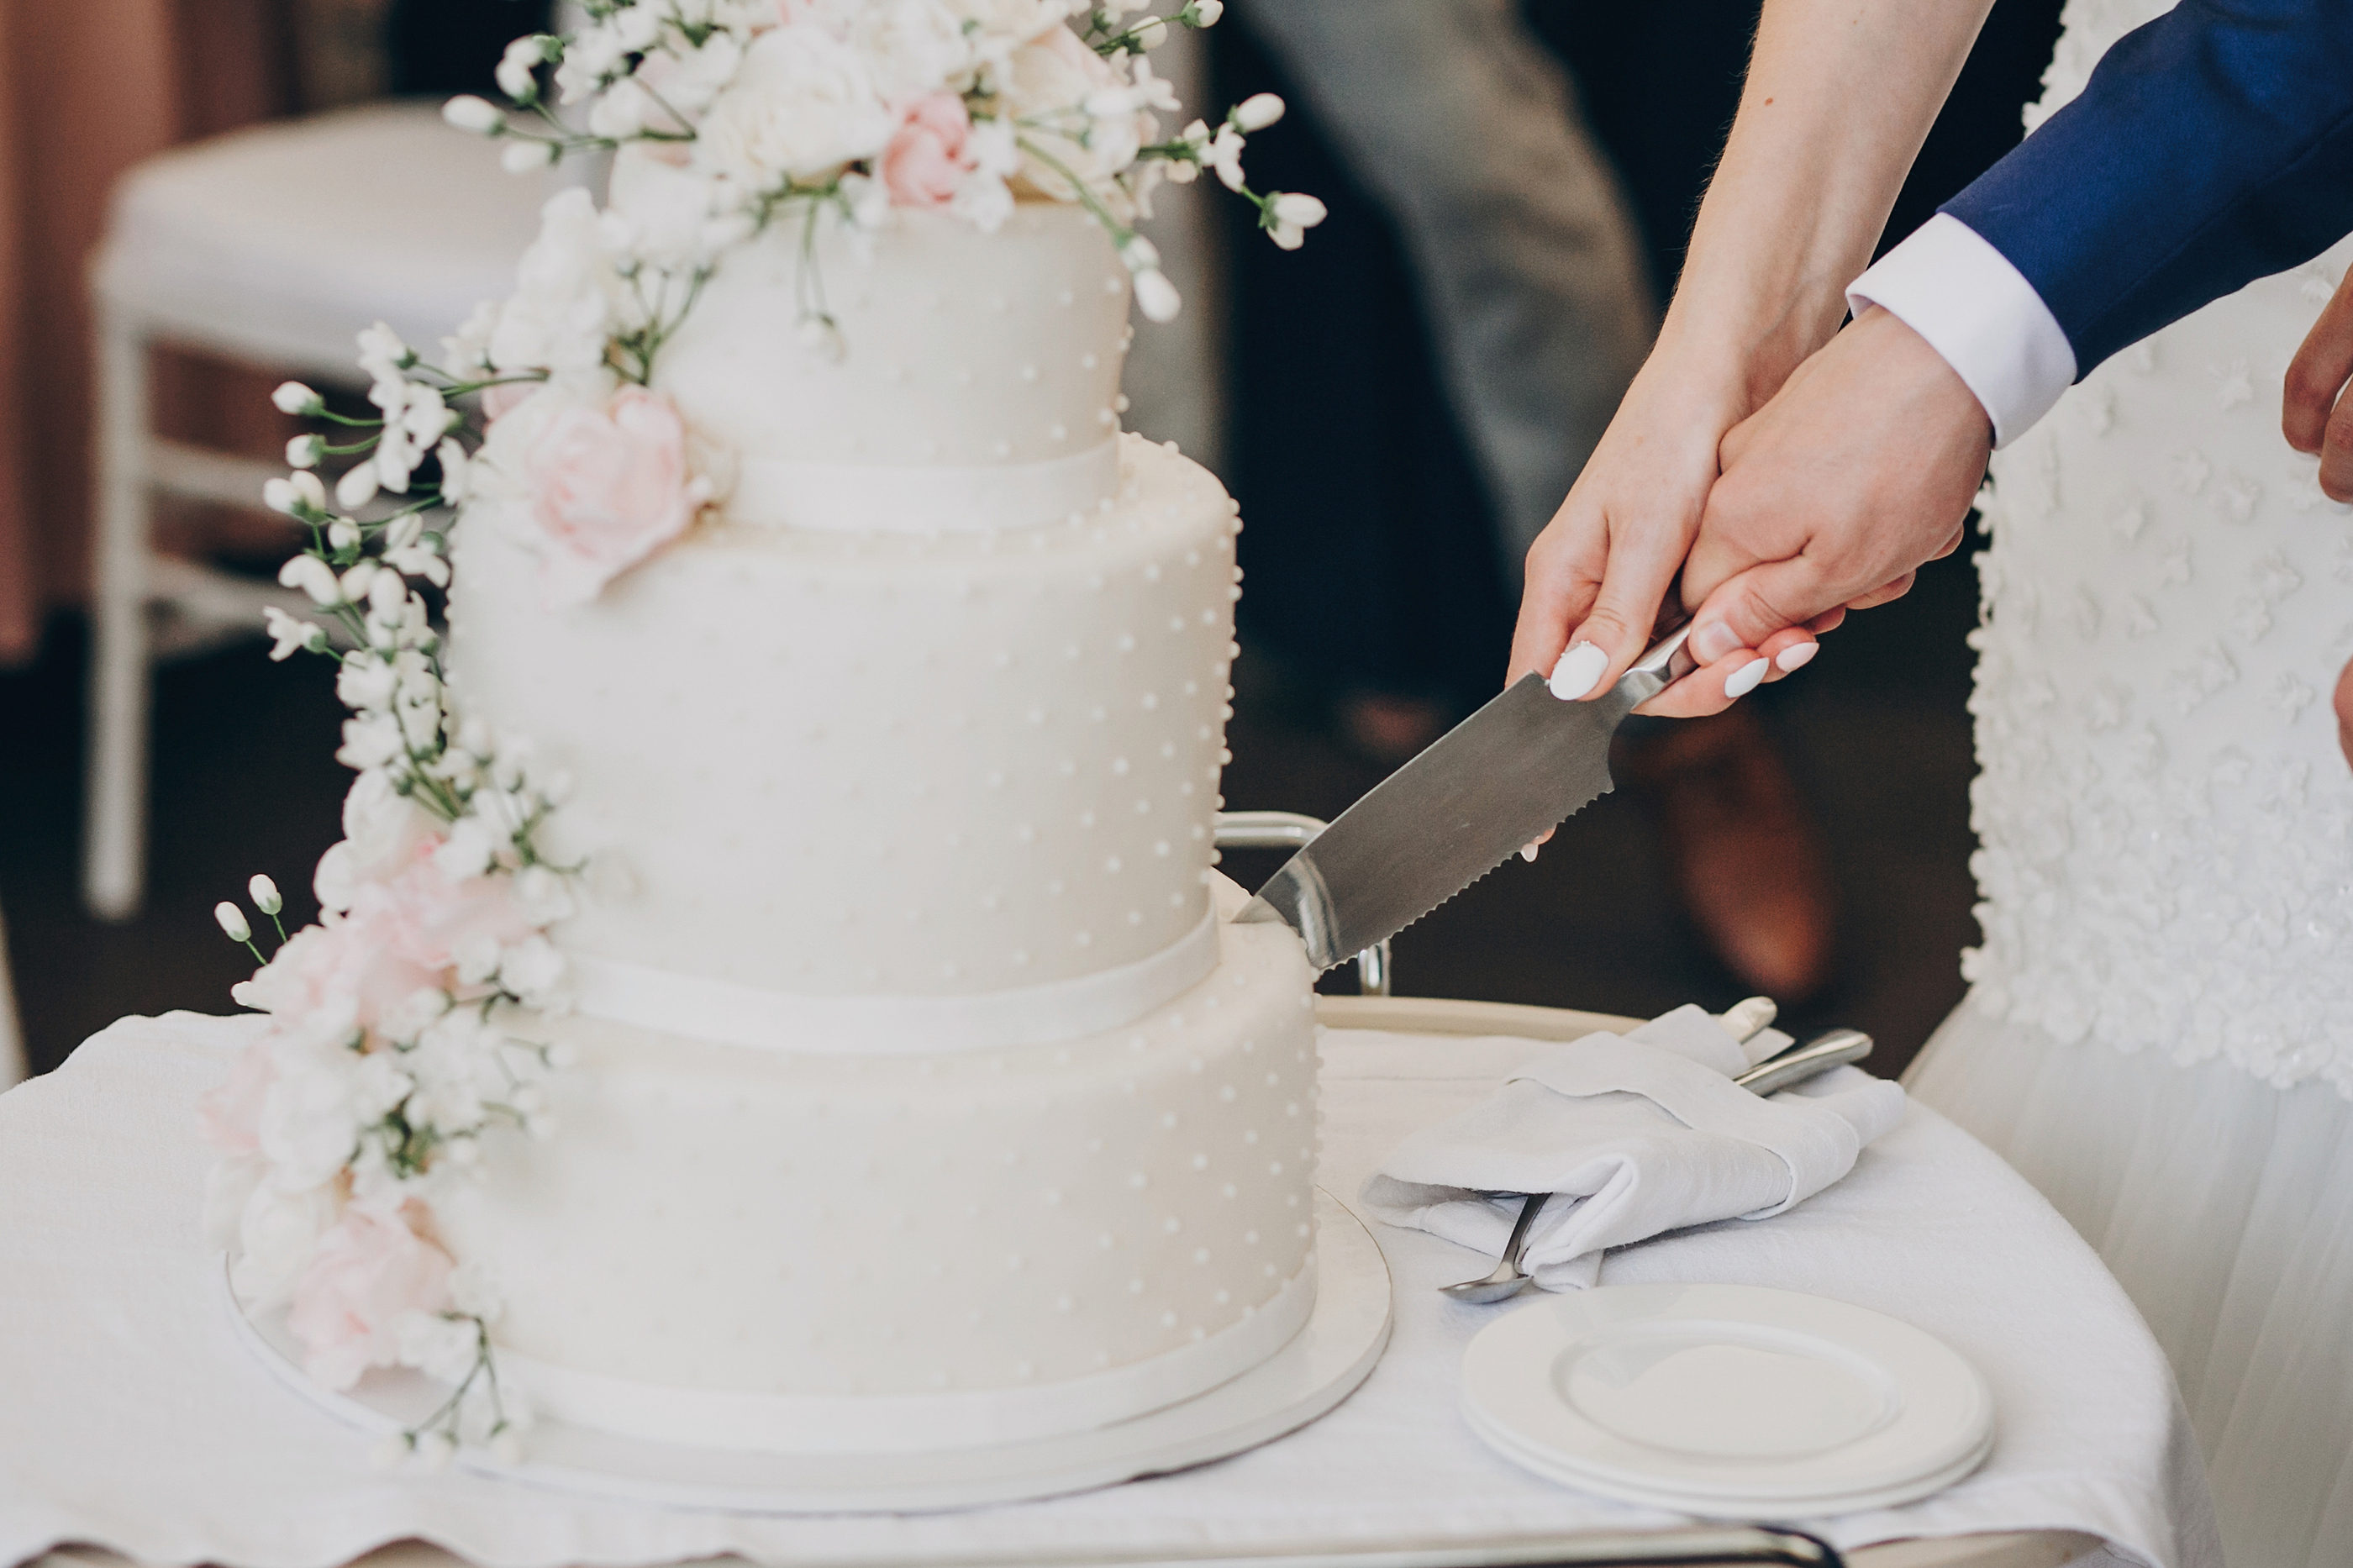 Bride And Groom cutting wedding cake